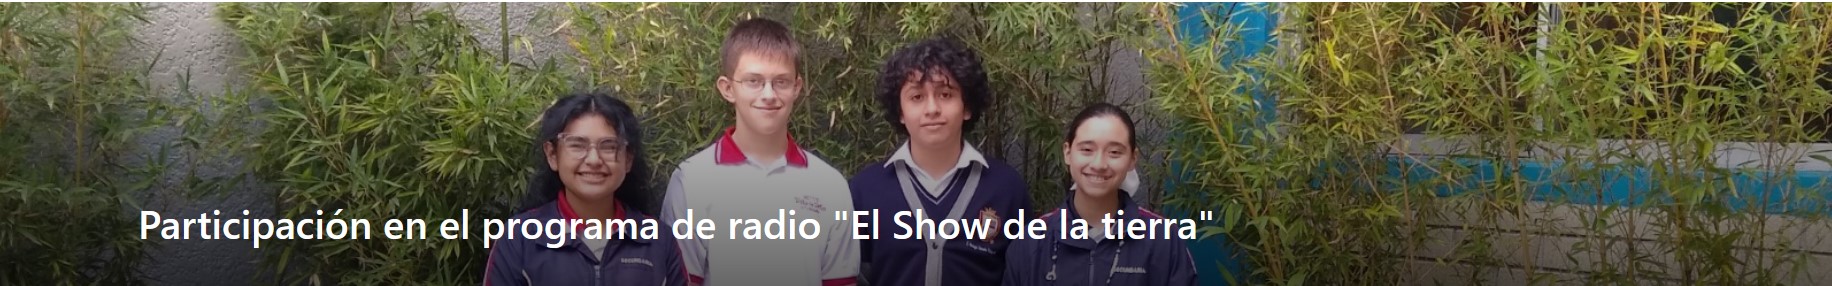 Show_radio1